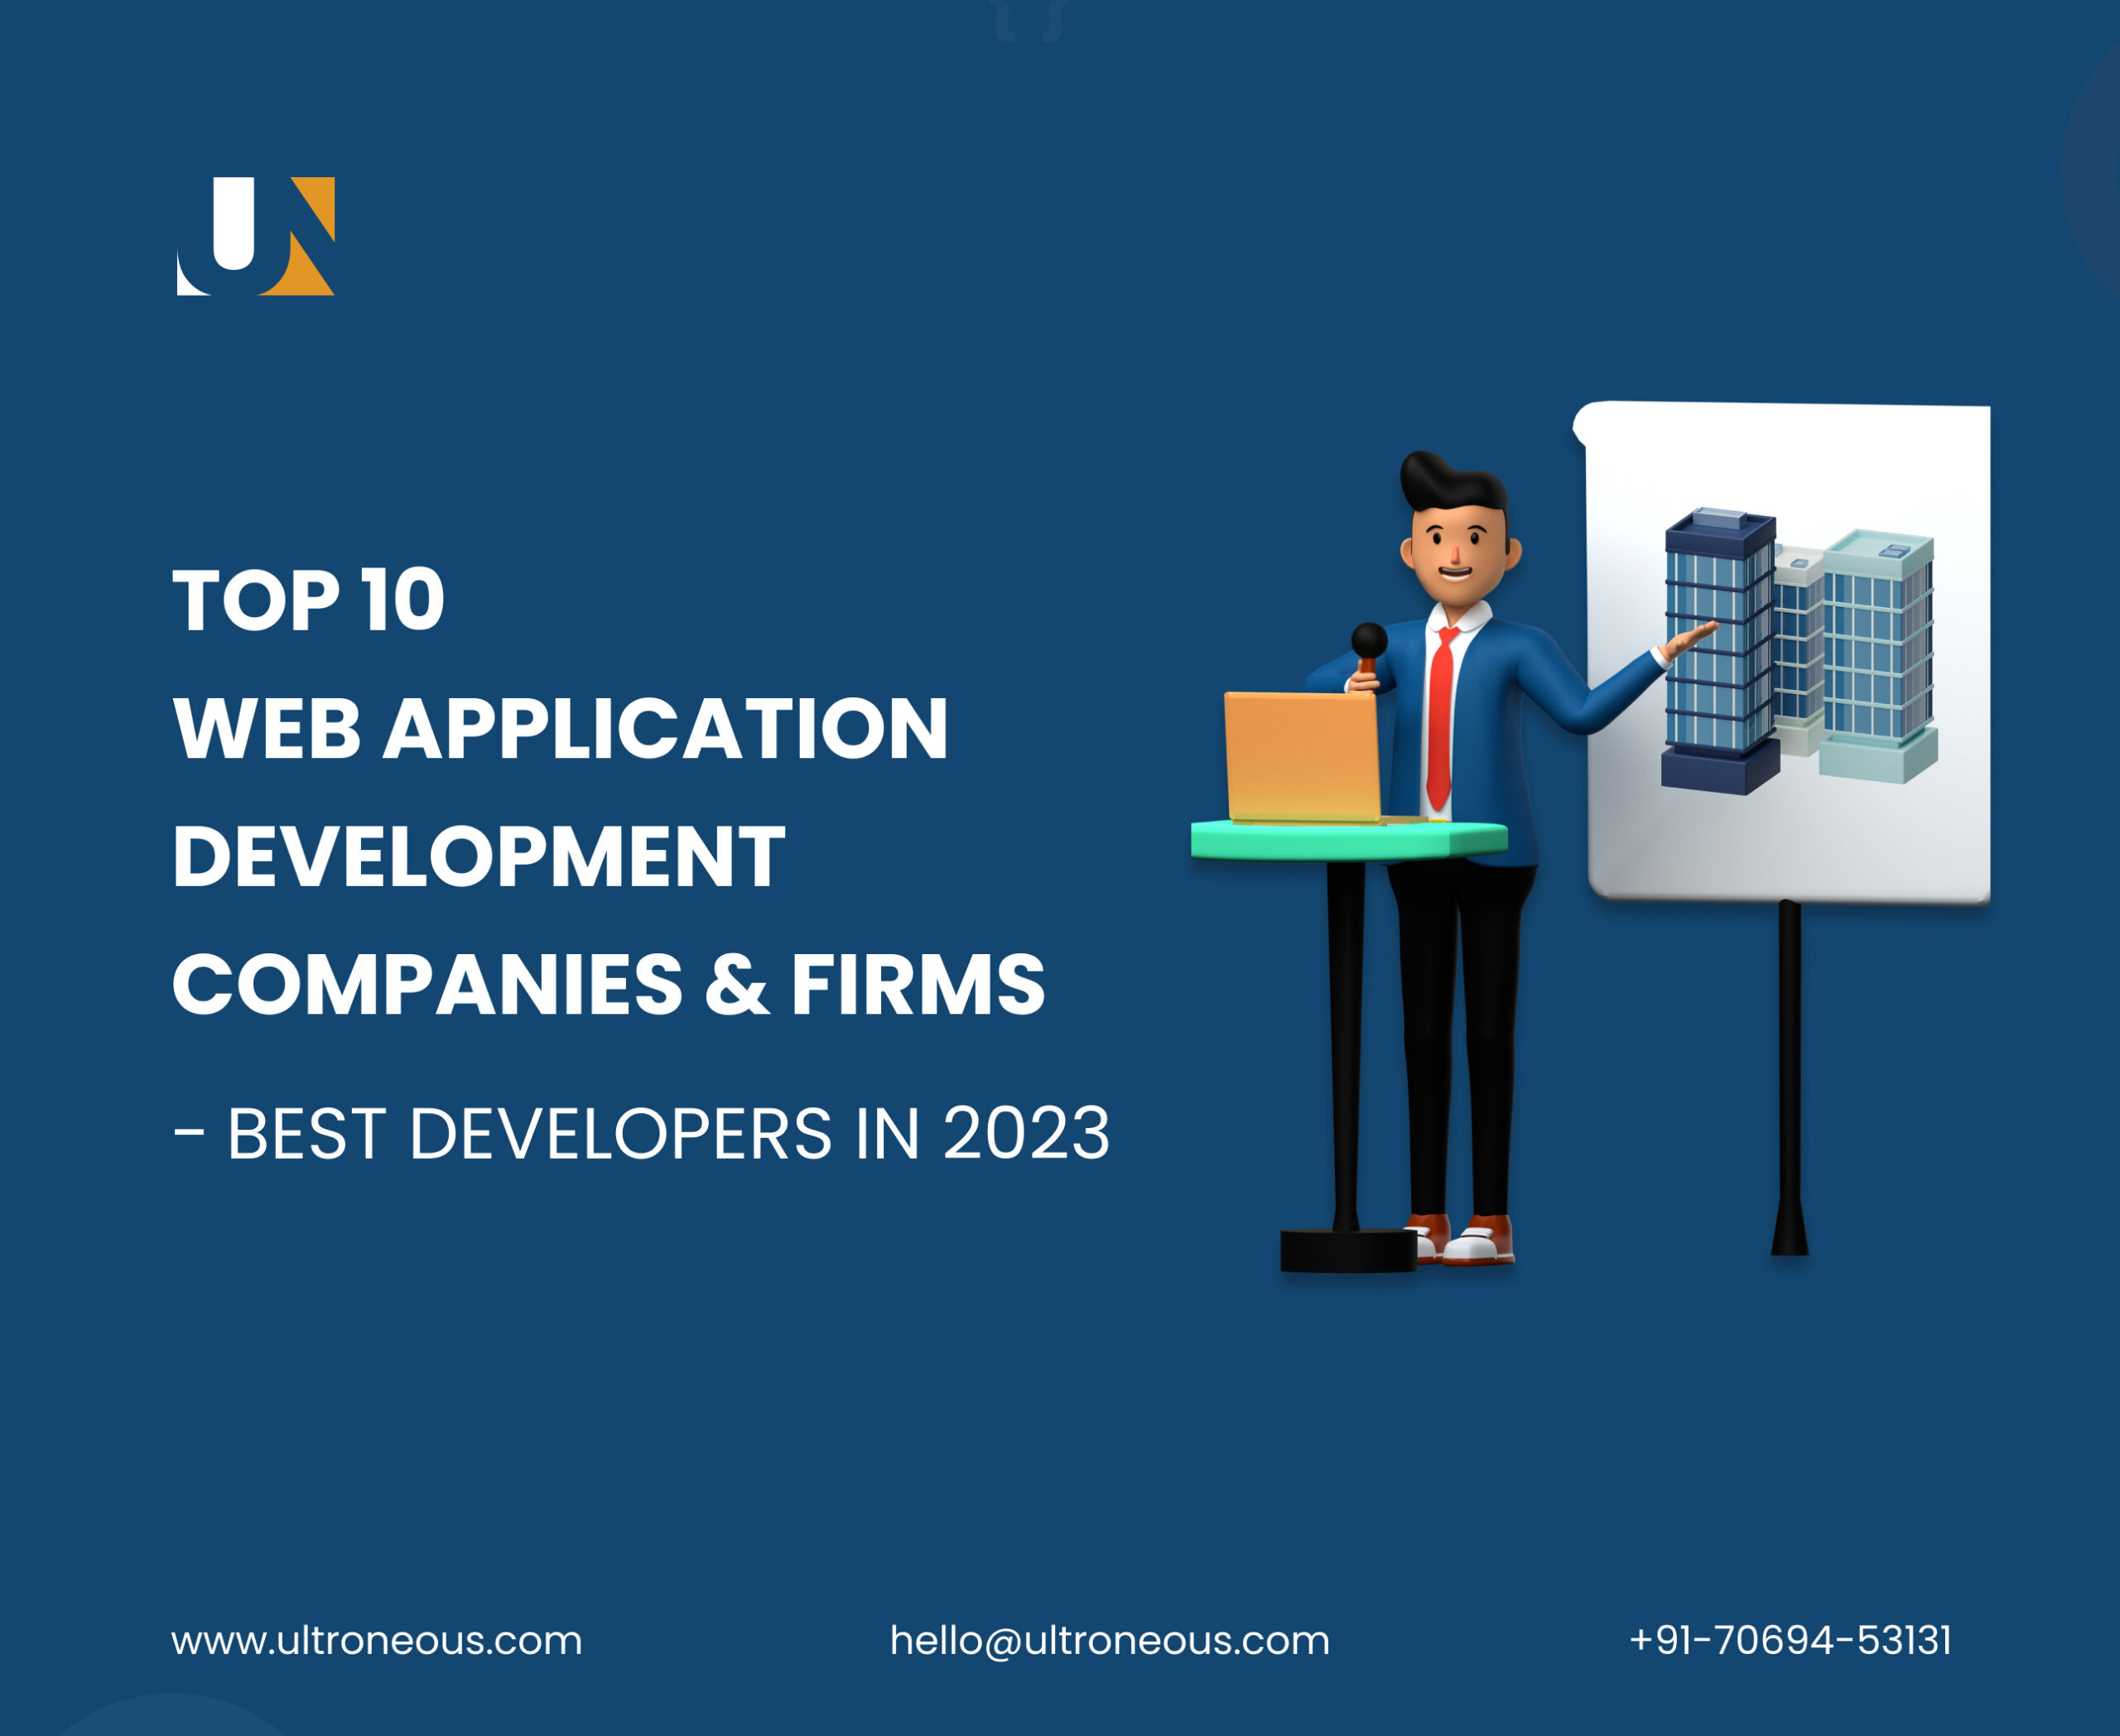 Top 10 web application development companies & firms